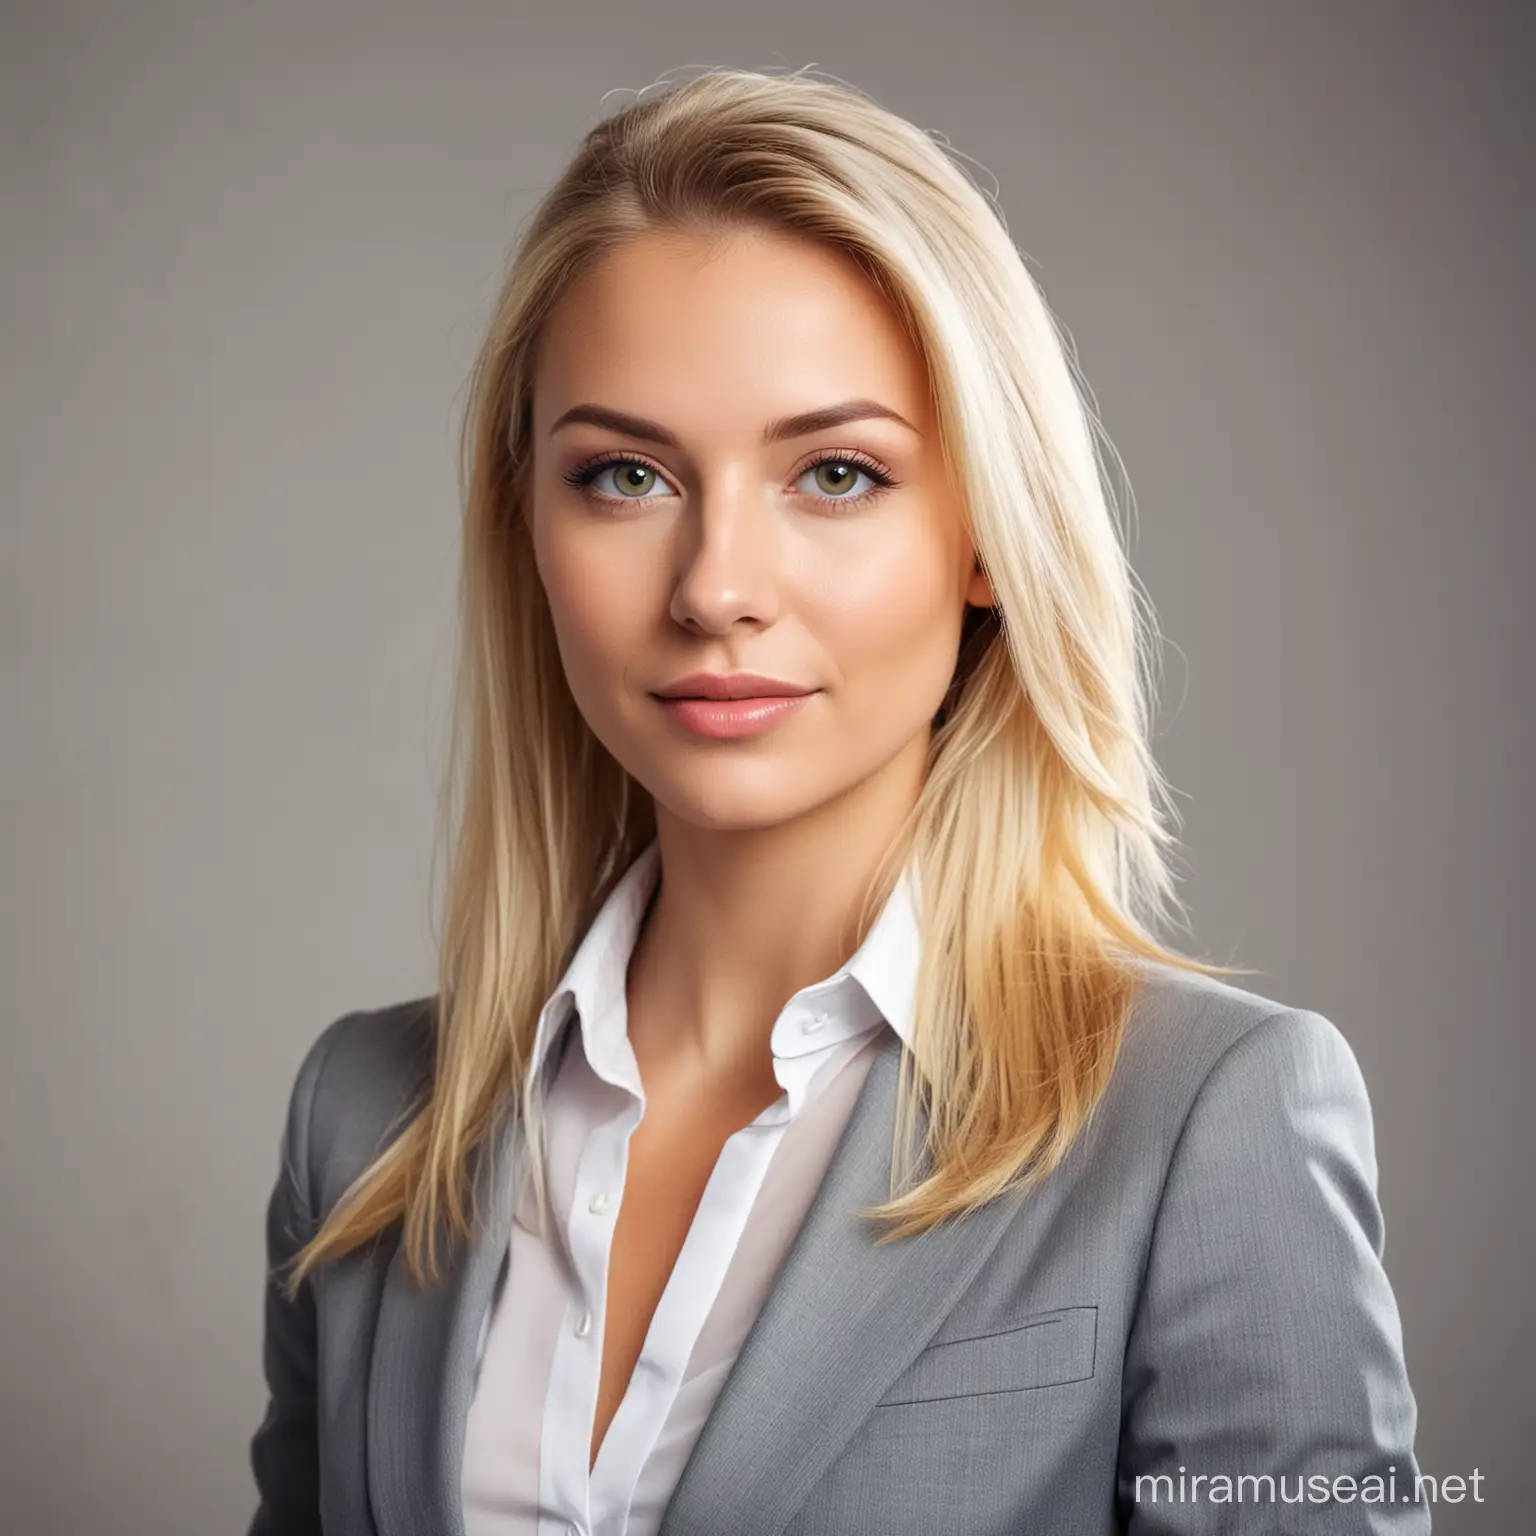 Professional Blonde Businesswoman Portrait